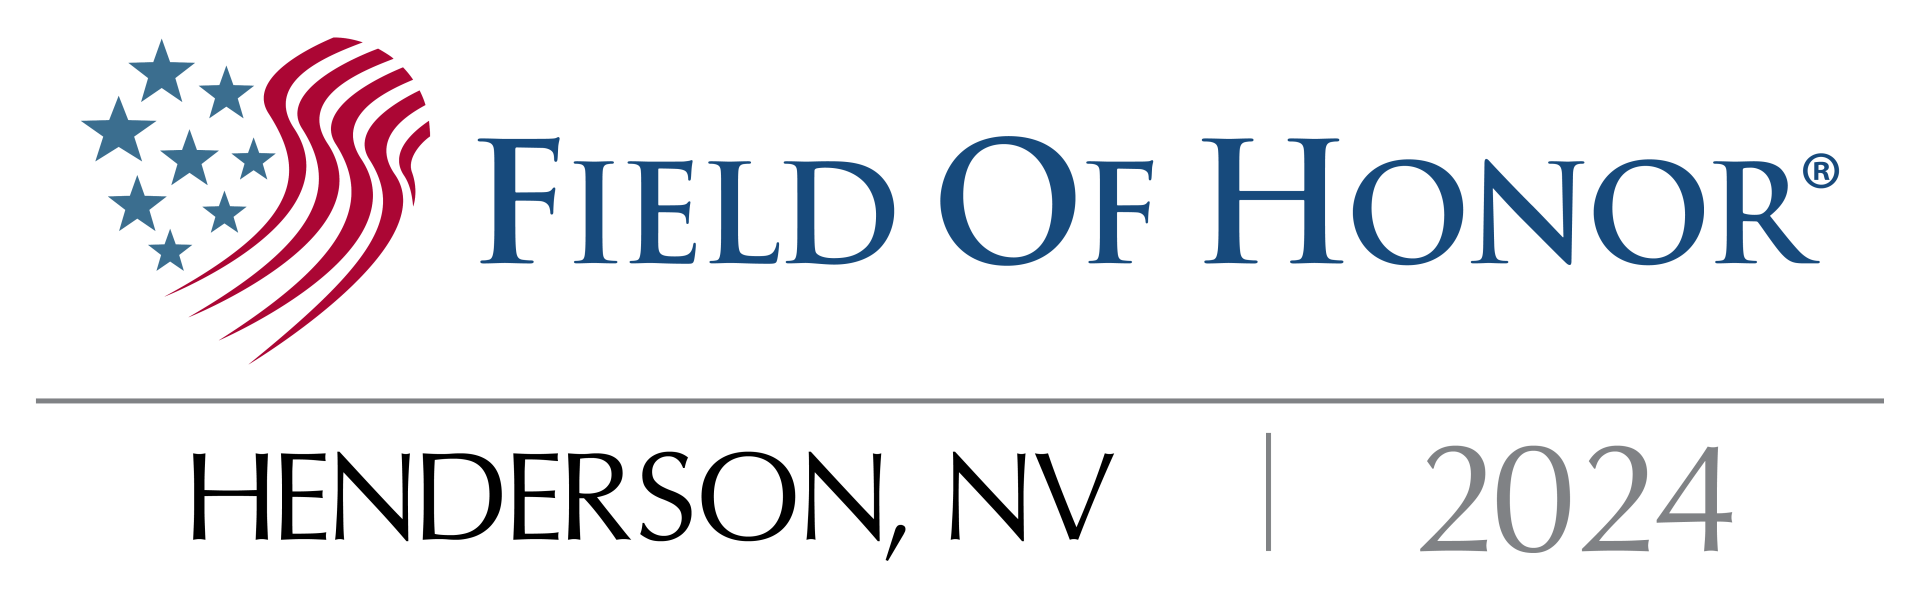 Field of Honor Henderson, NV Logo